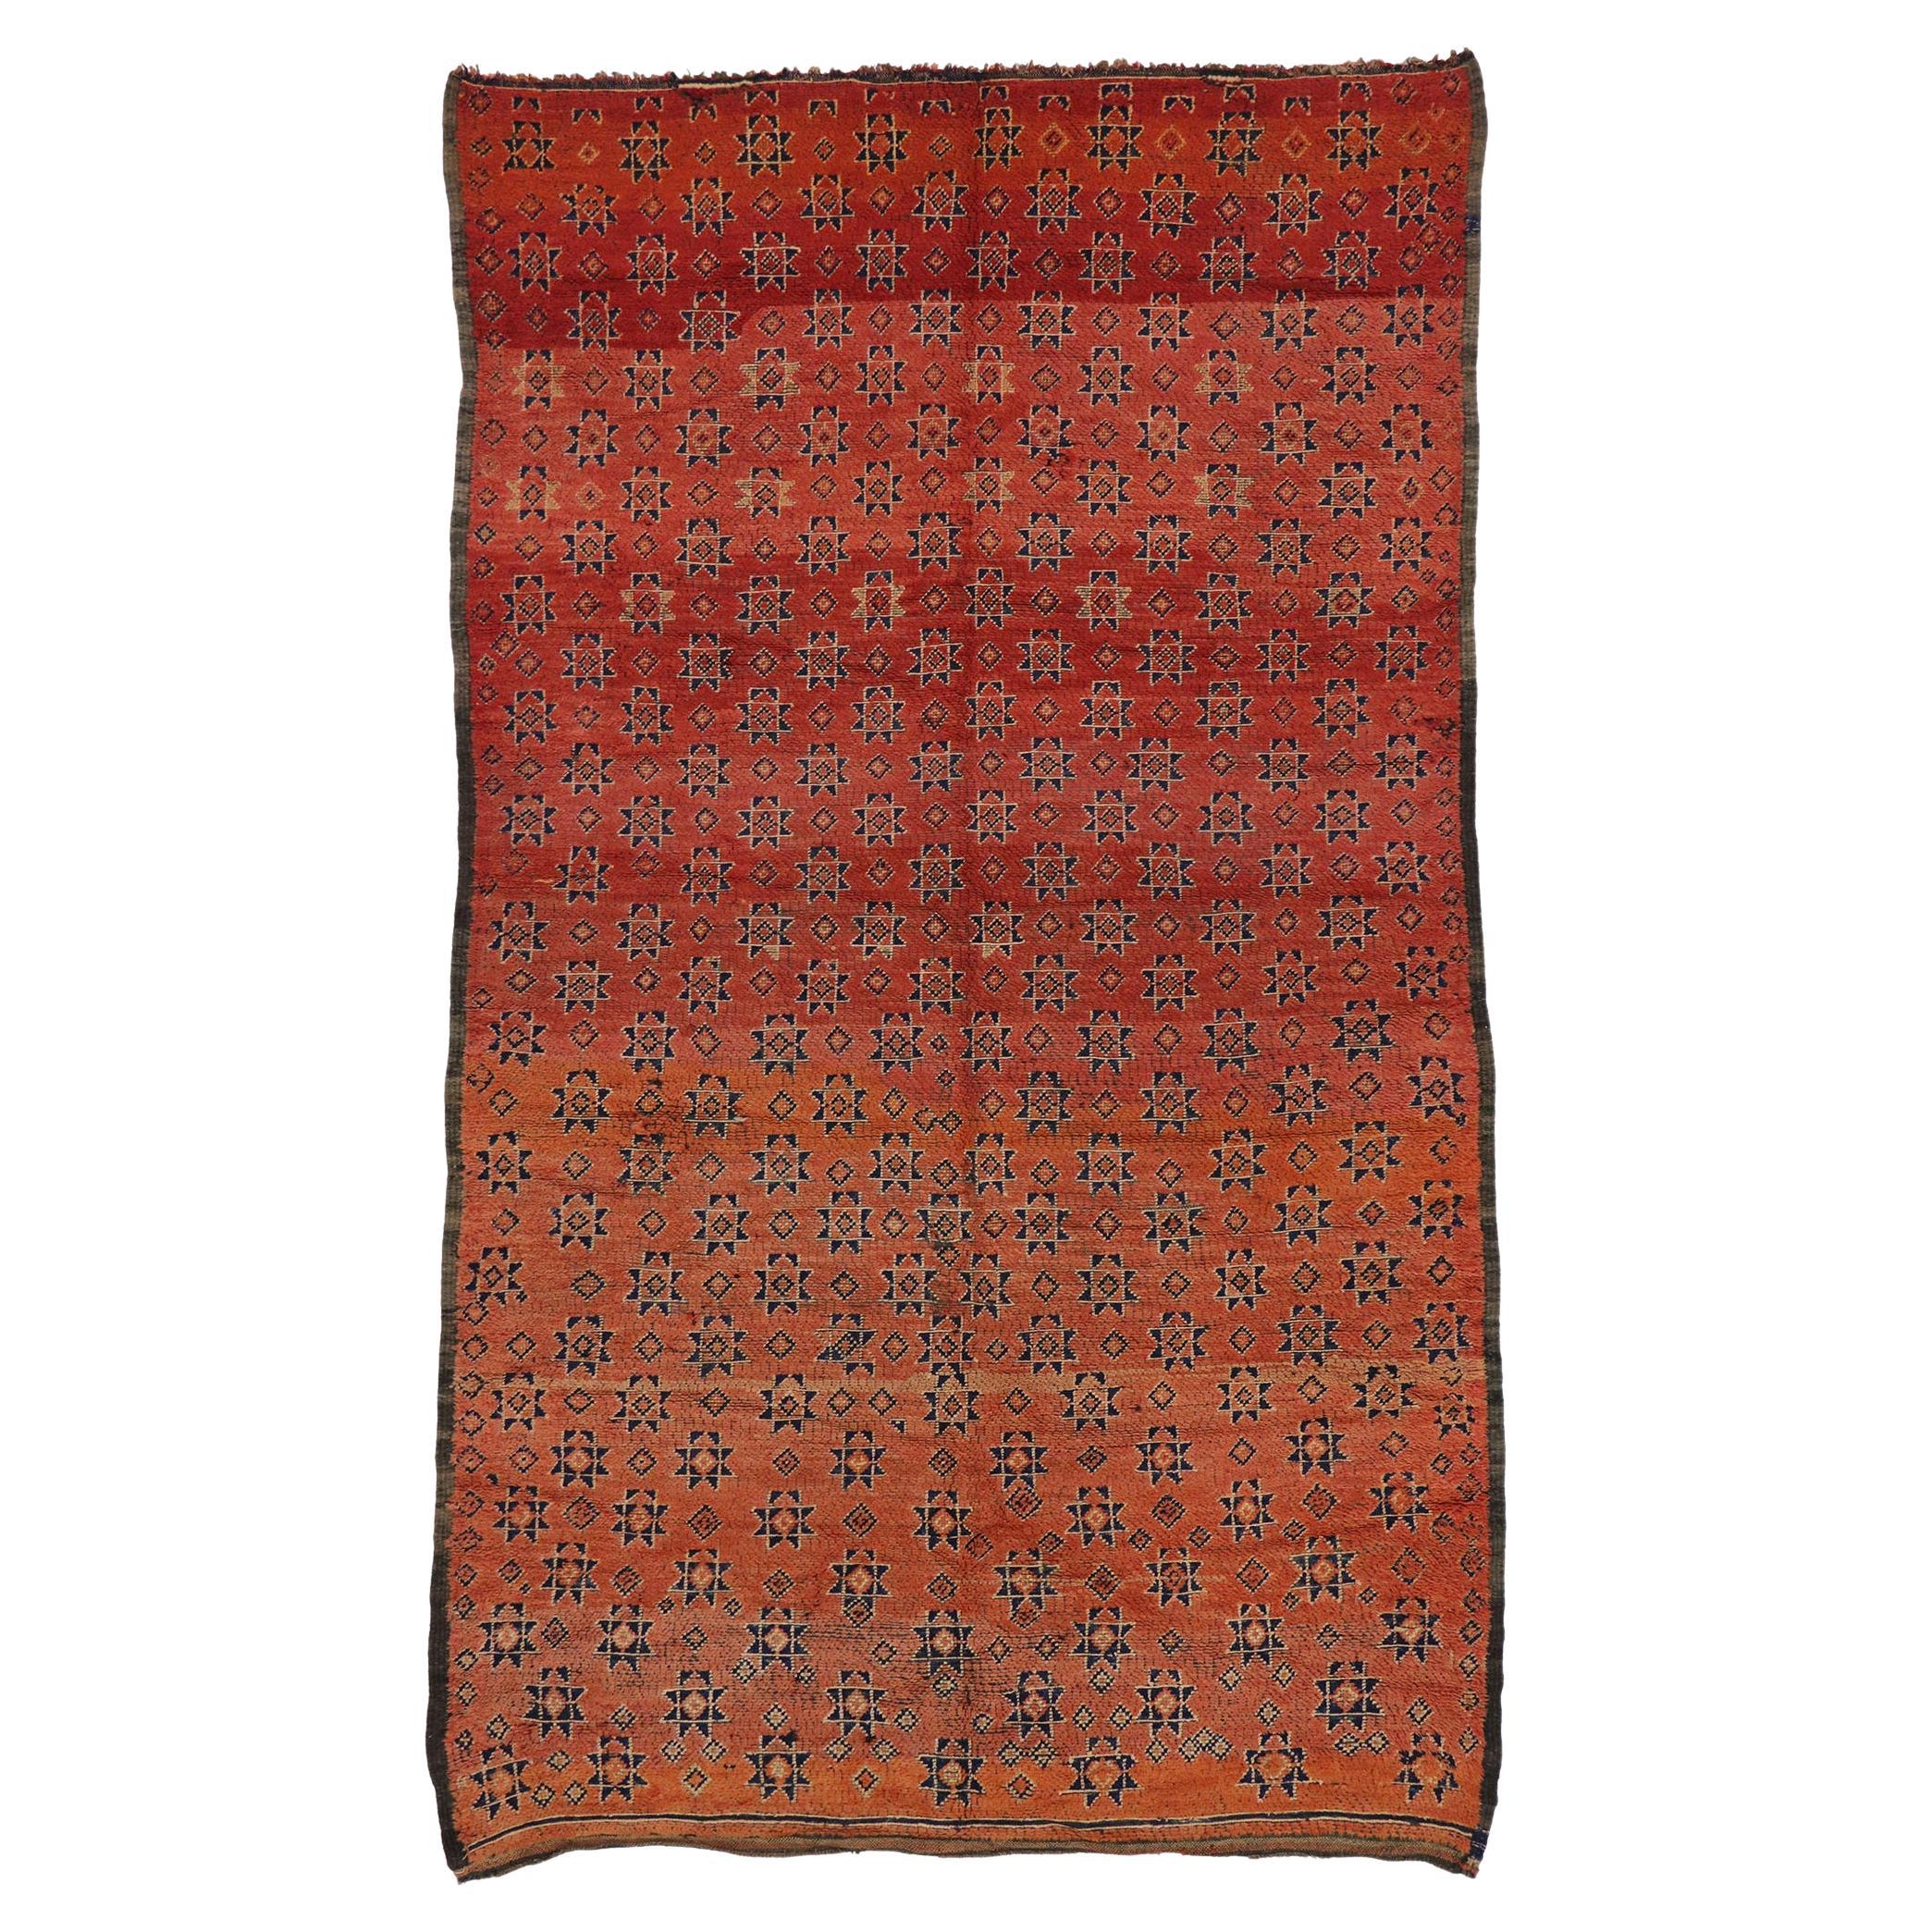 Vintage Beni MGuild Moroccan Rug, Midcentury Modern Meets Tribal Enchantment